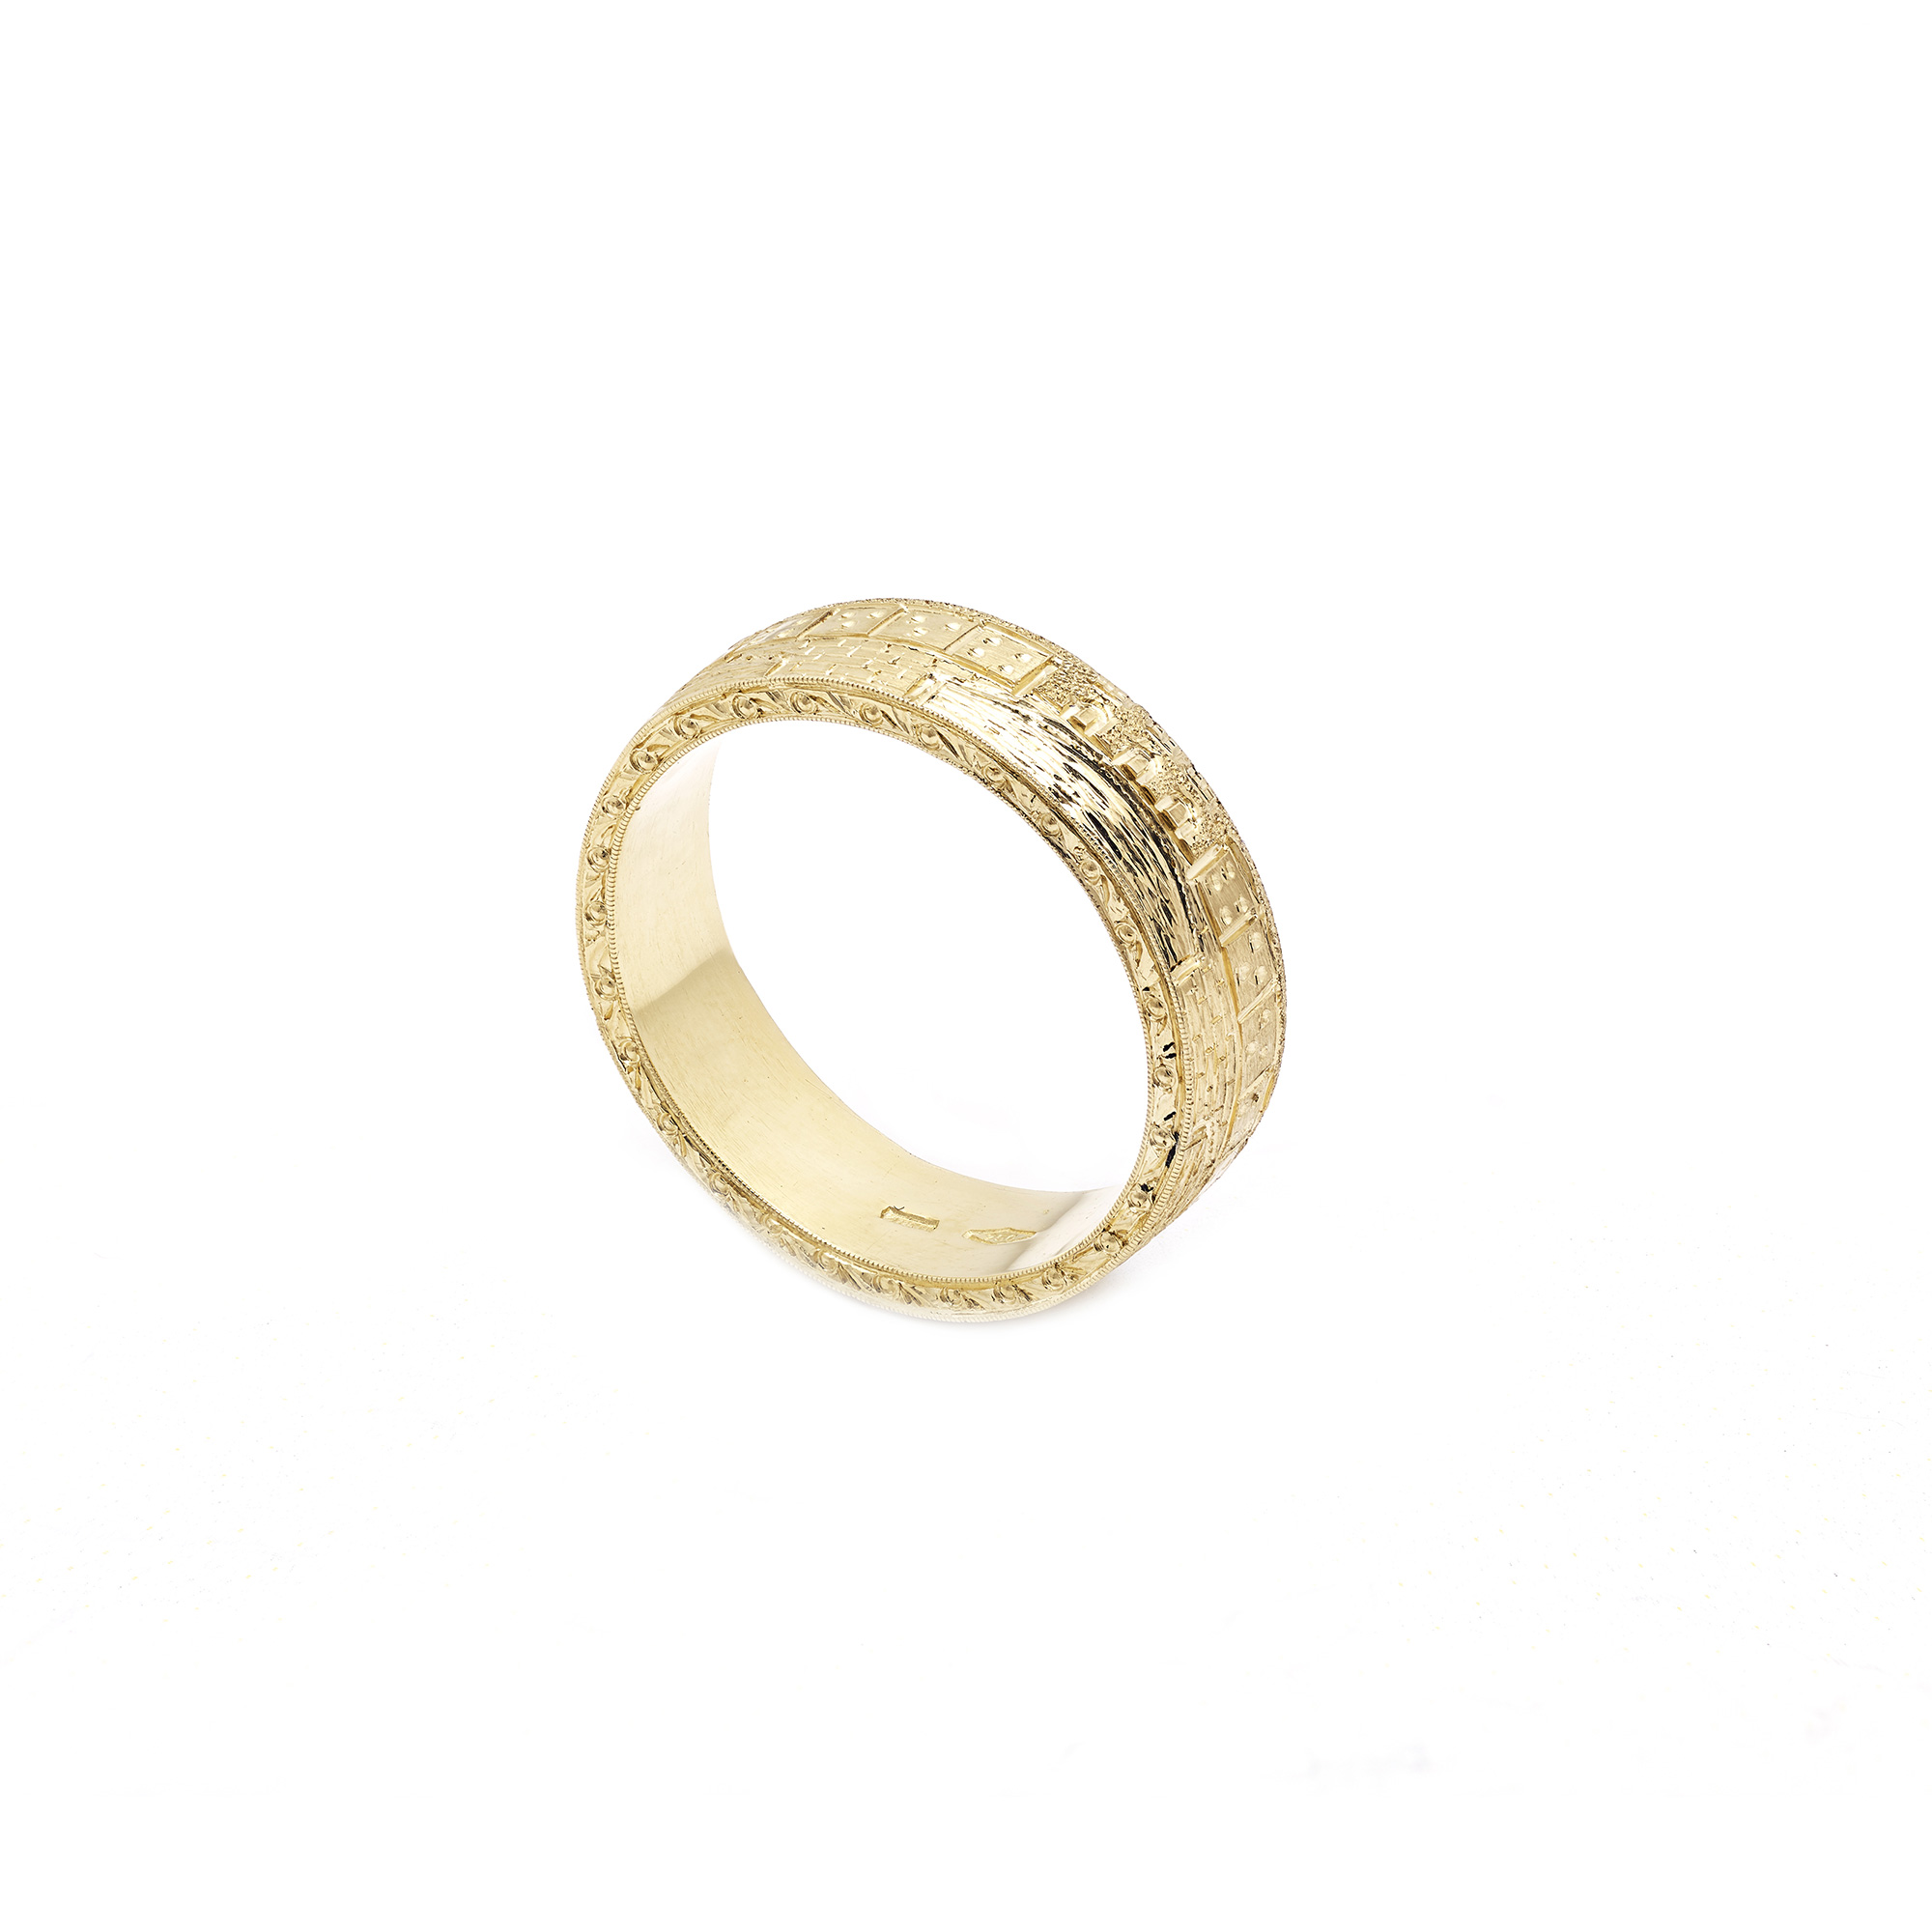 Ponte Vecchio gold engraved ring